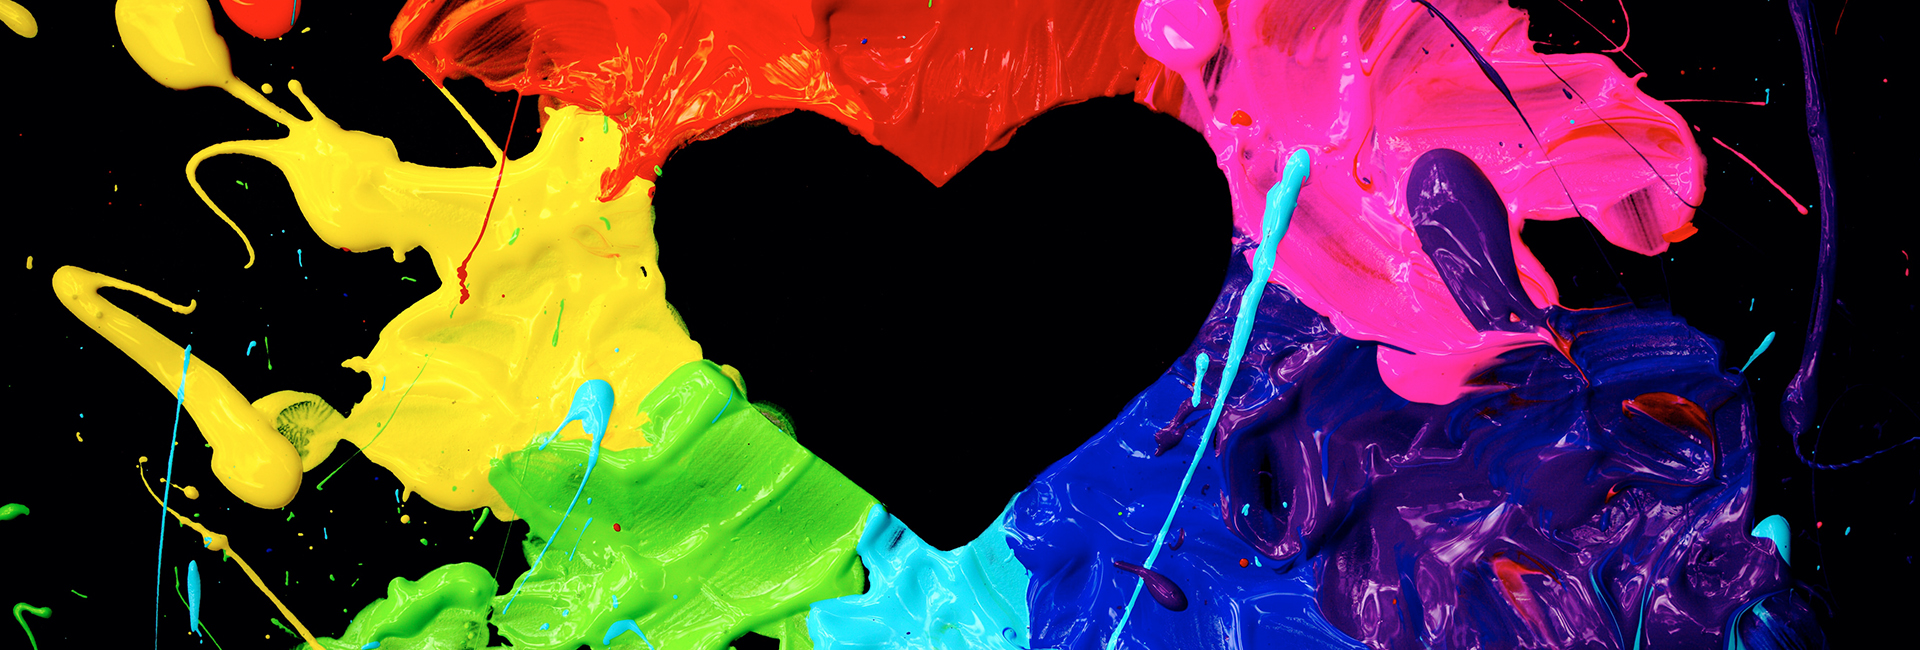 rainbow-paint-black-heart-in-center